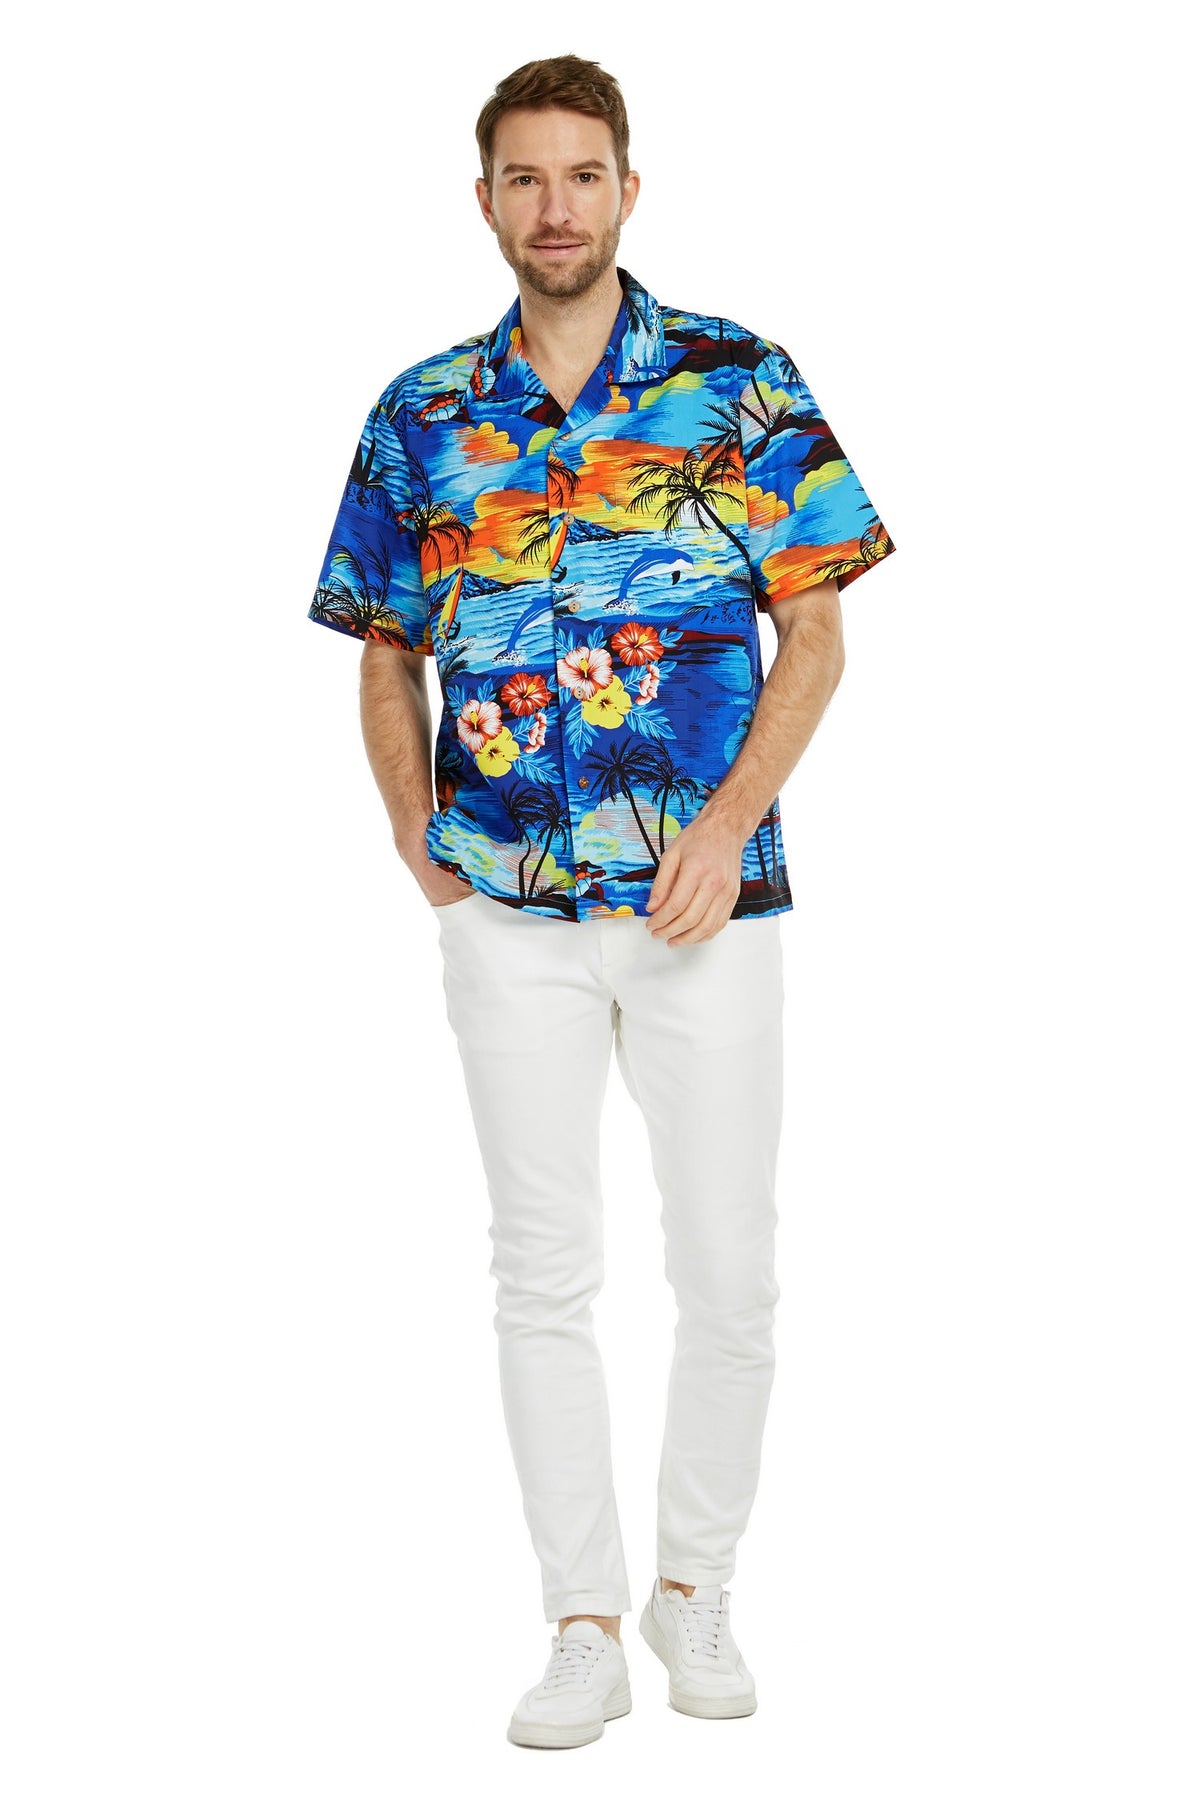 Hawaii Hangover Hawaiian Shirt Aloha Shirt in Sunset with Dolphin Blue 2XL